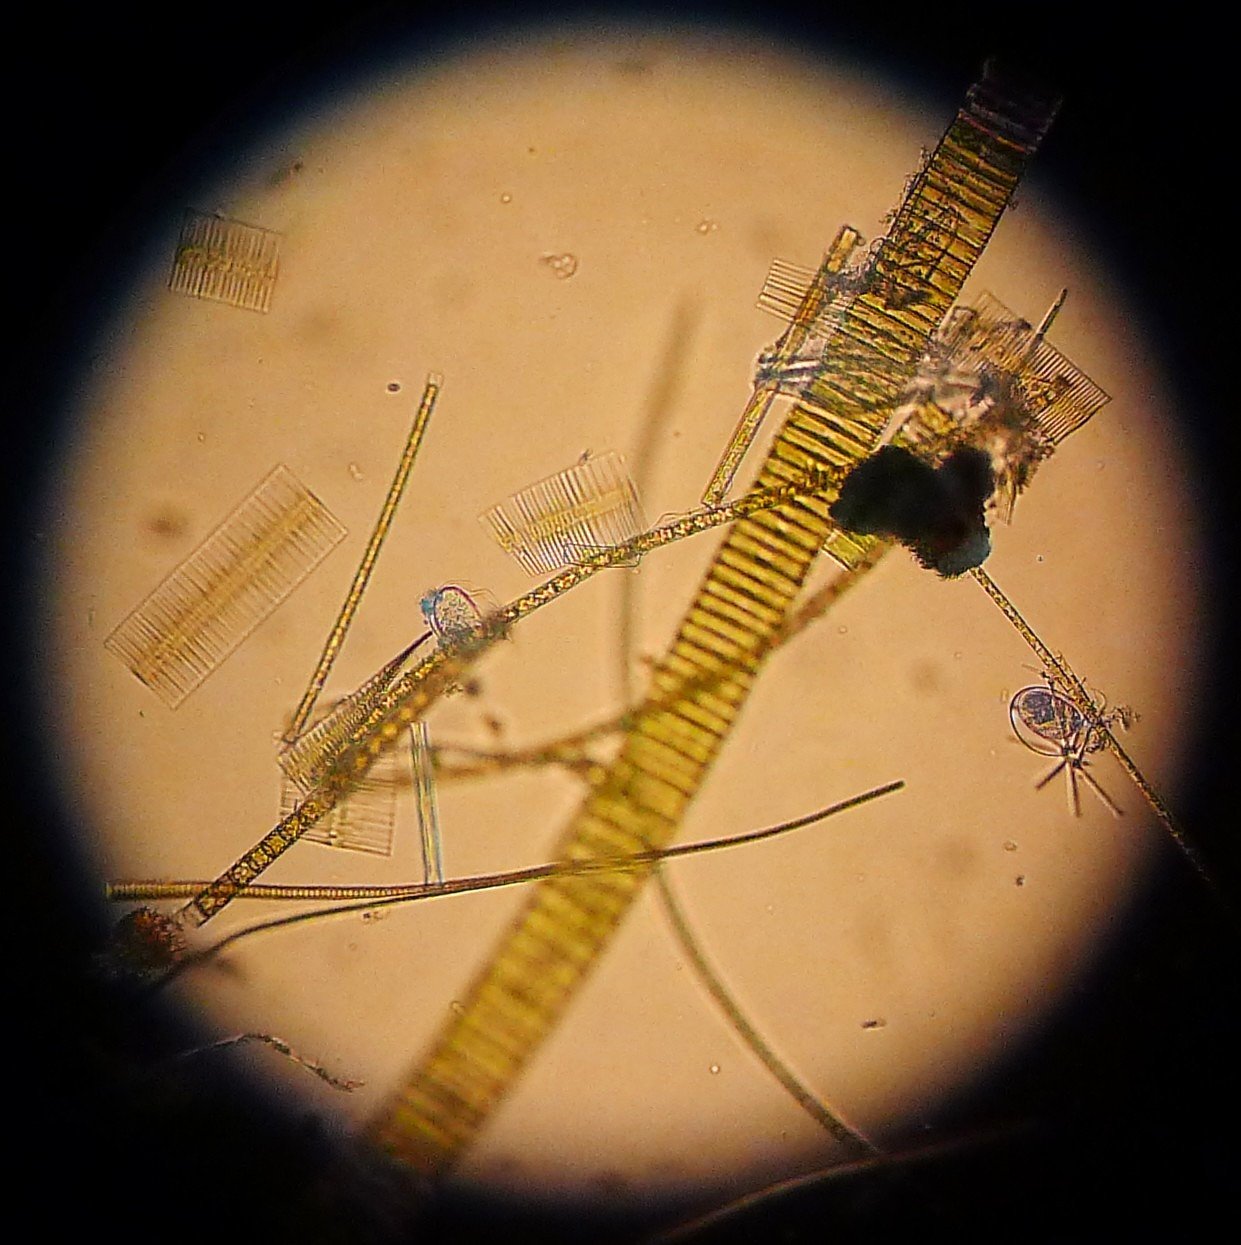 Kieselagen unter dem Mikroskop